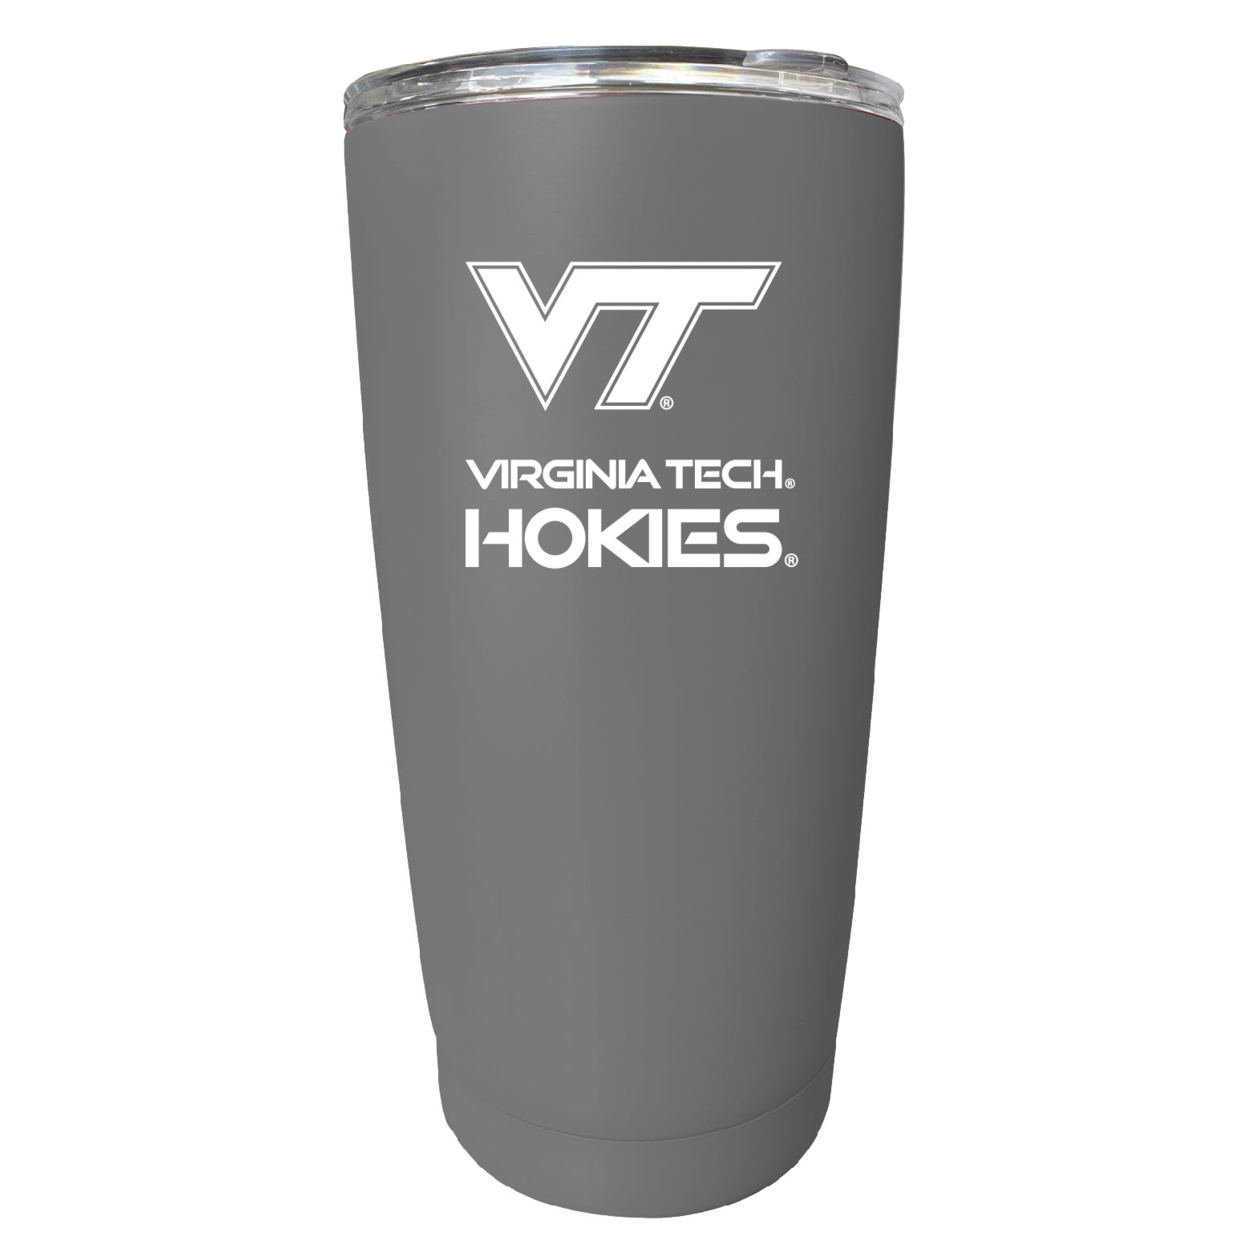 Virginia Tech Hokies 16 Oz Stainless Steel Insulated Tumbler - Gray